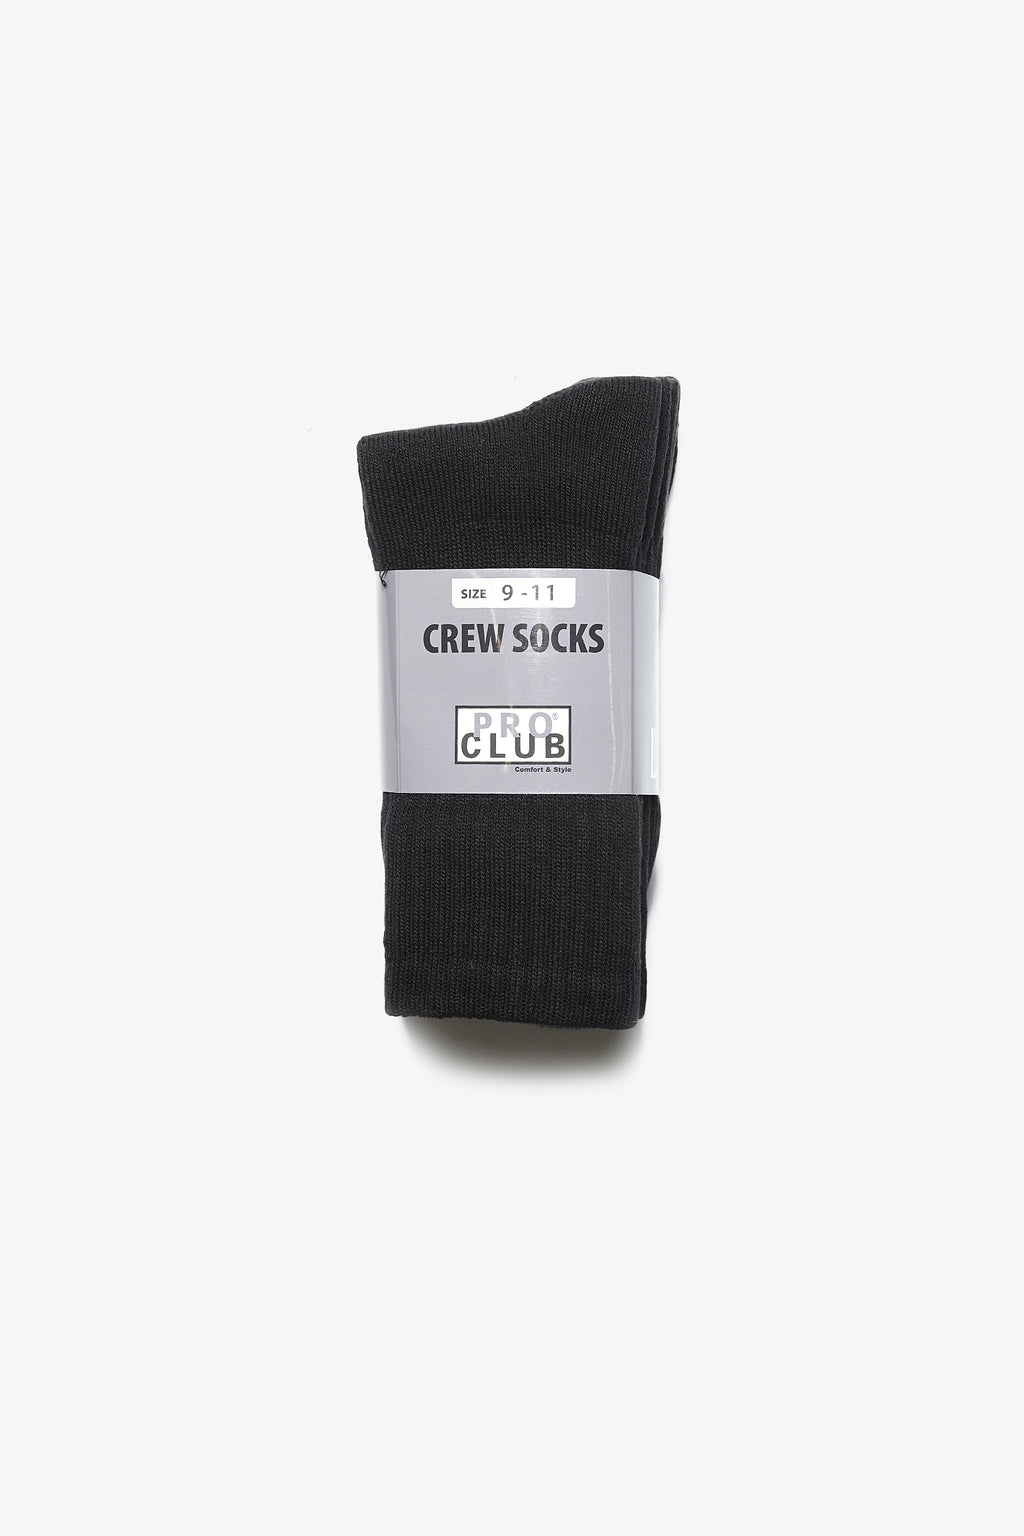 Pro Club - Heavyweight Crew Socks - 3 Pack - Black